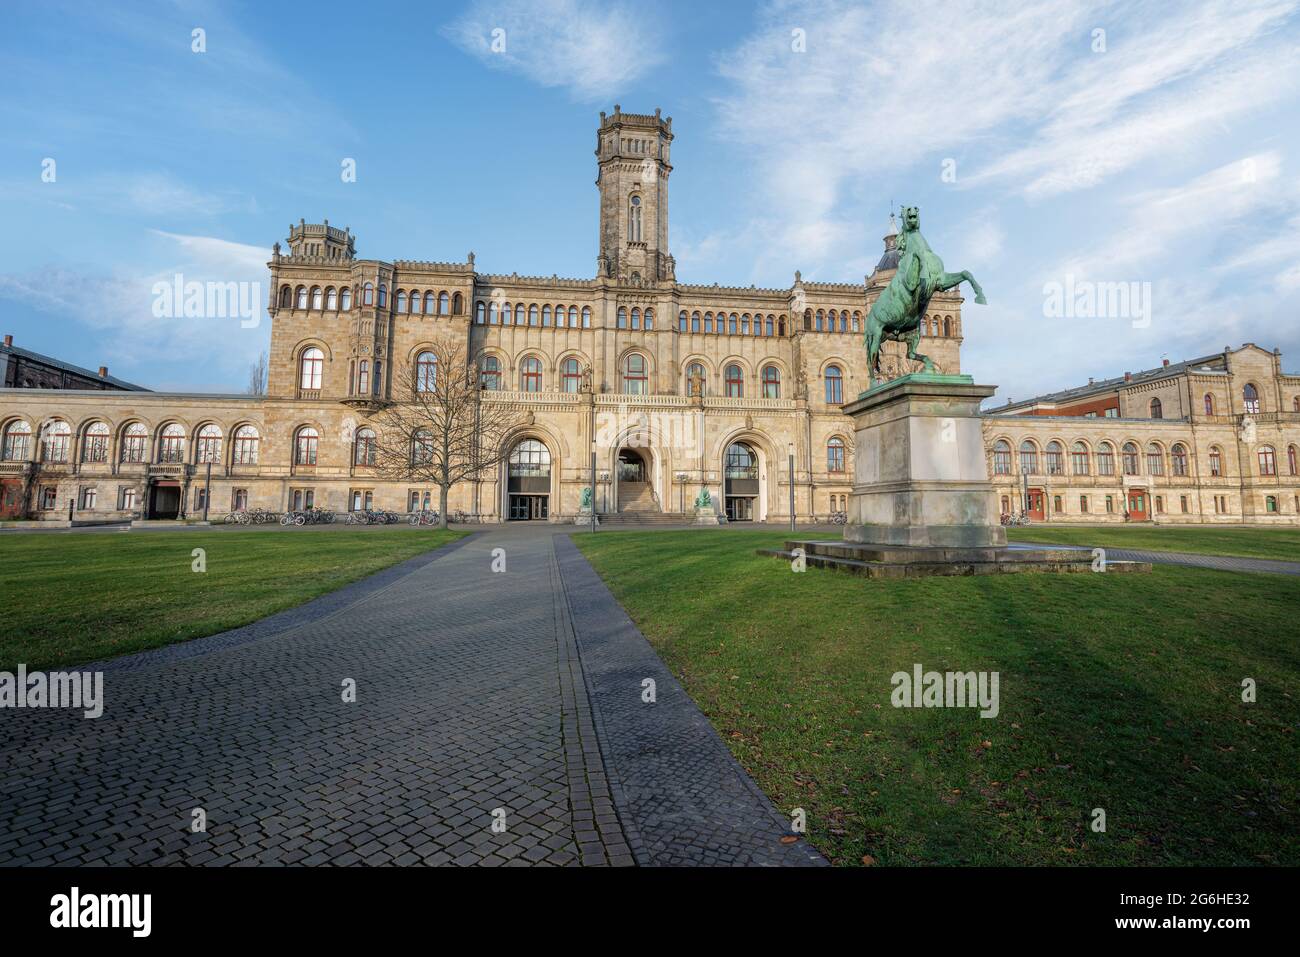 Leibniz University - Welfenschloss Main Building and Horse Statue - Hanover, Germany Stock Photo